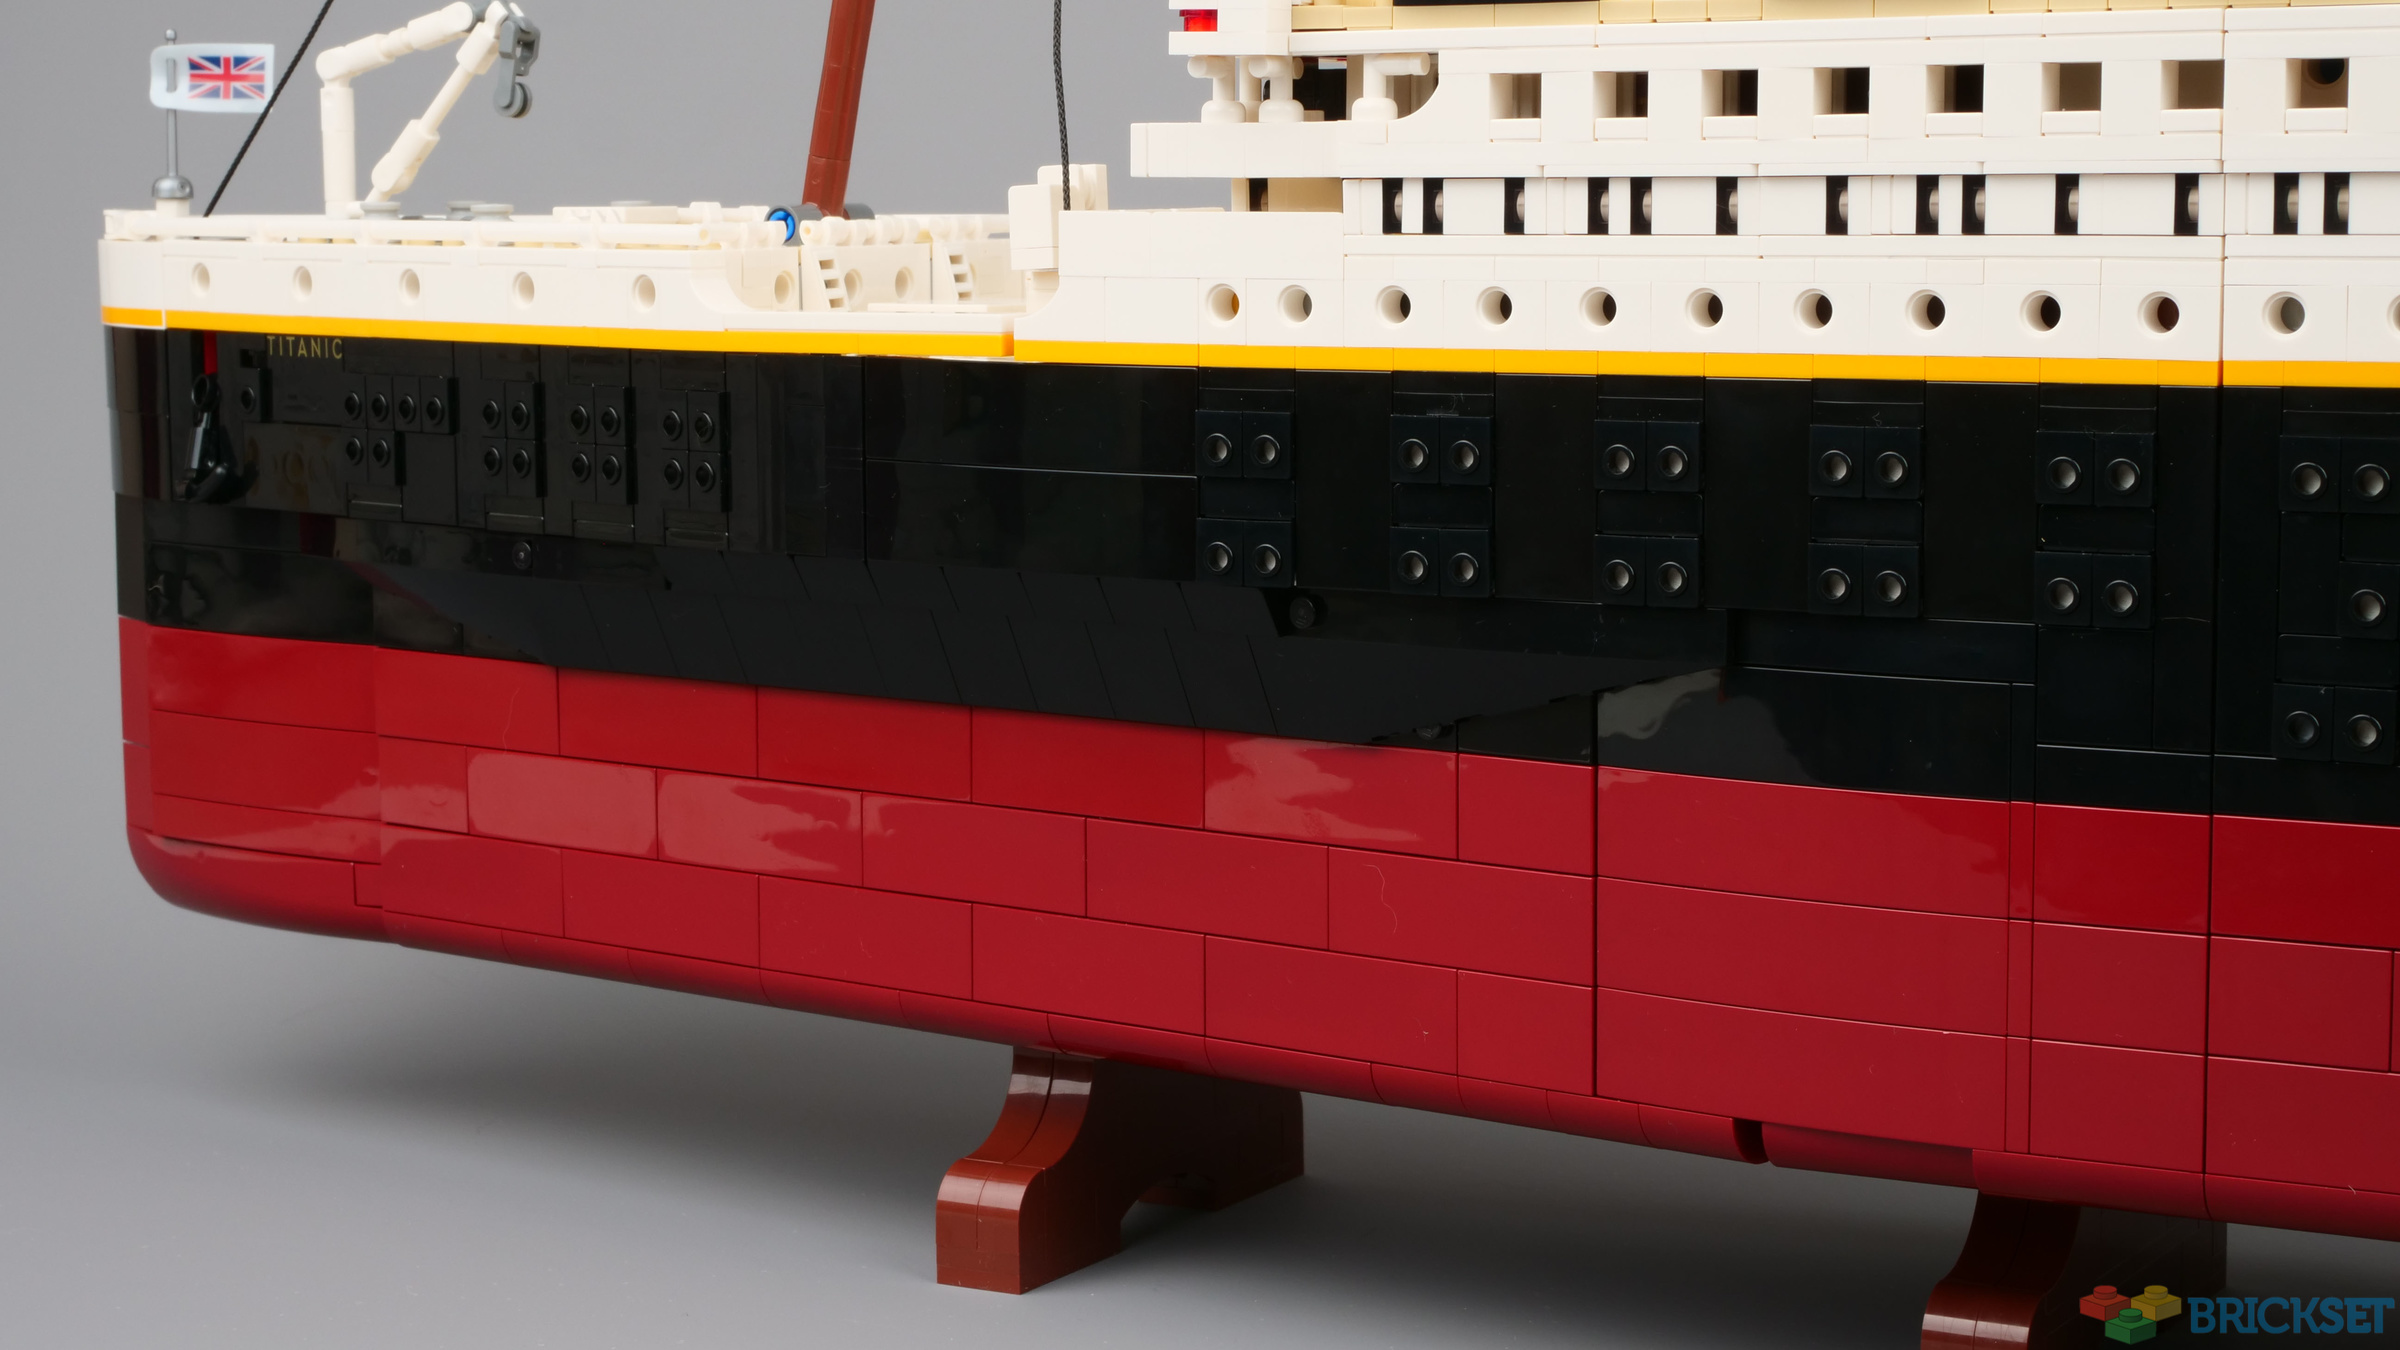 LEGO 10294 Titanic review